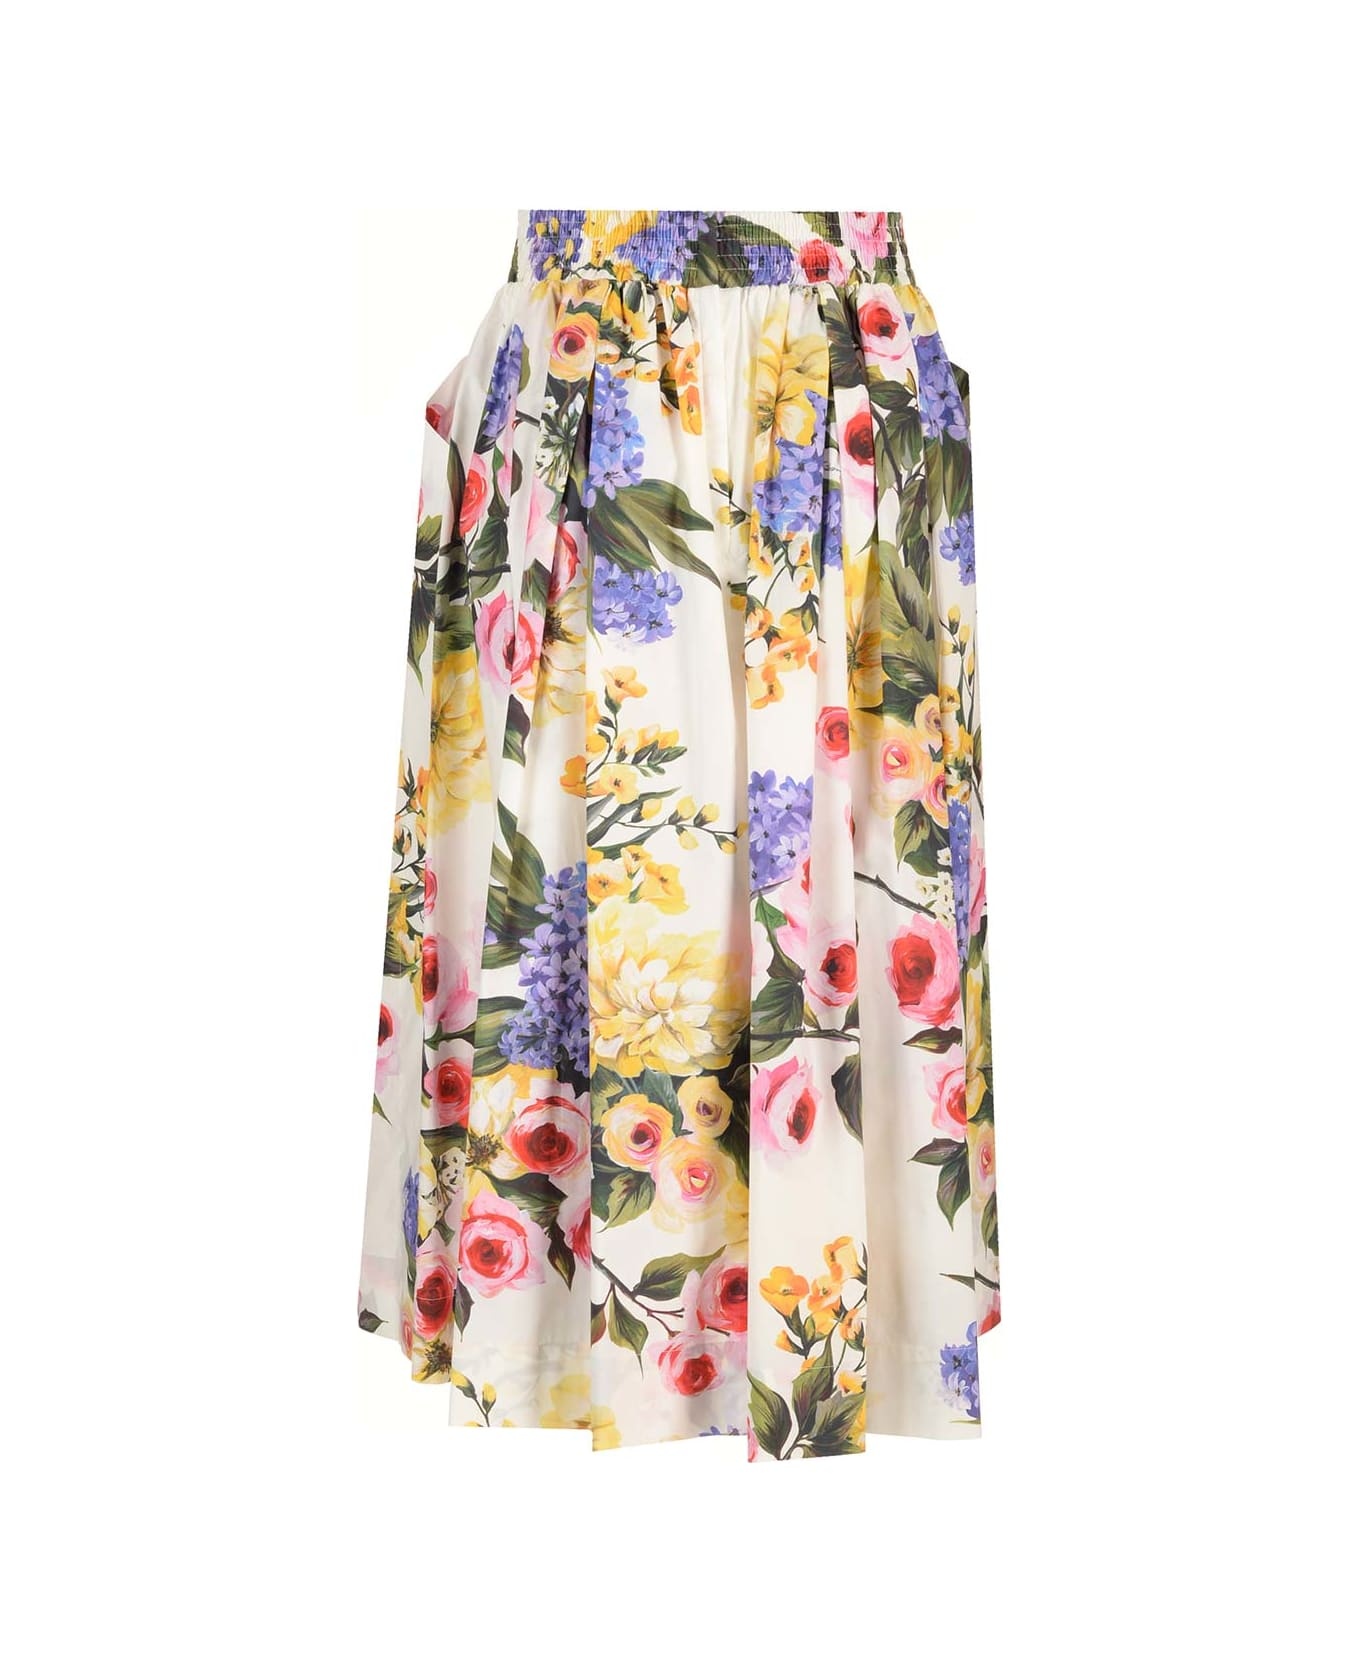 Floral Print Skirt - 2